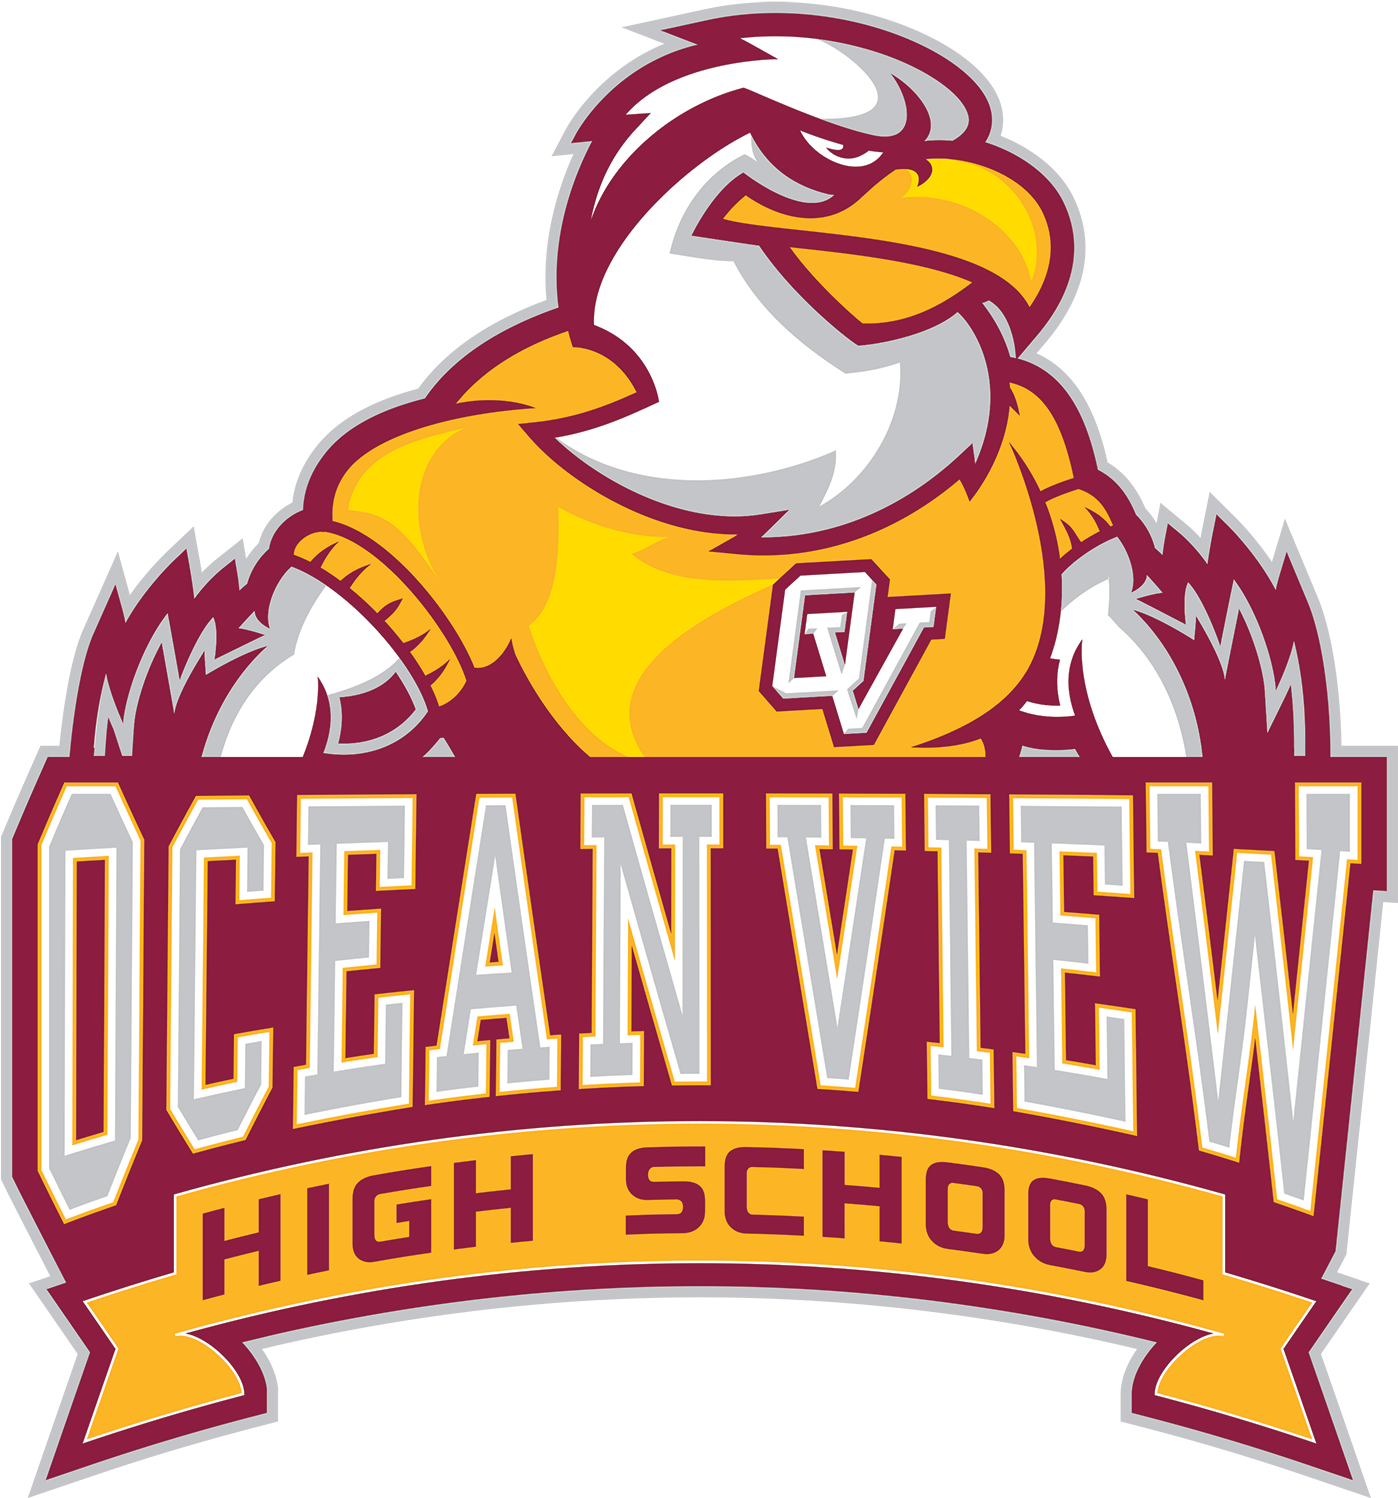 At Ocean View High School - Ocean View High School Seahawks (1444x1544)